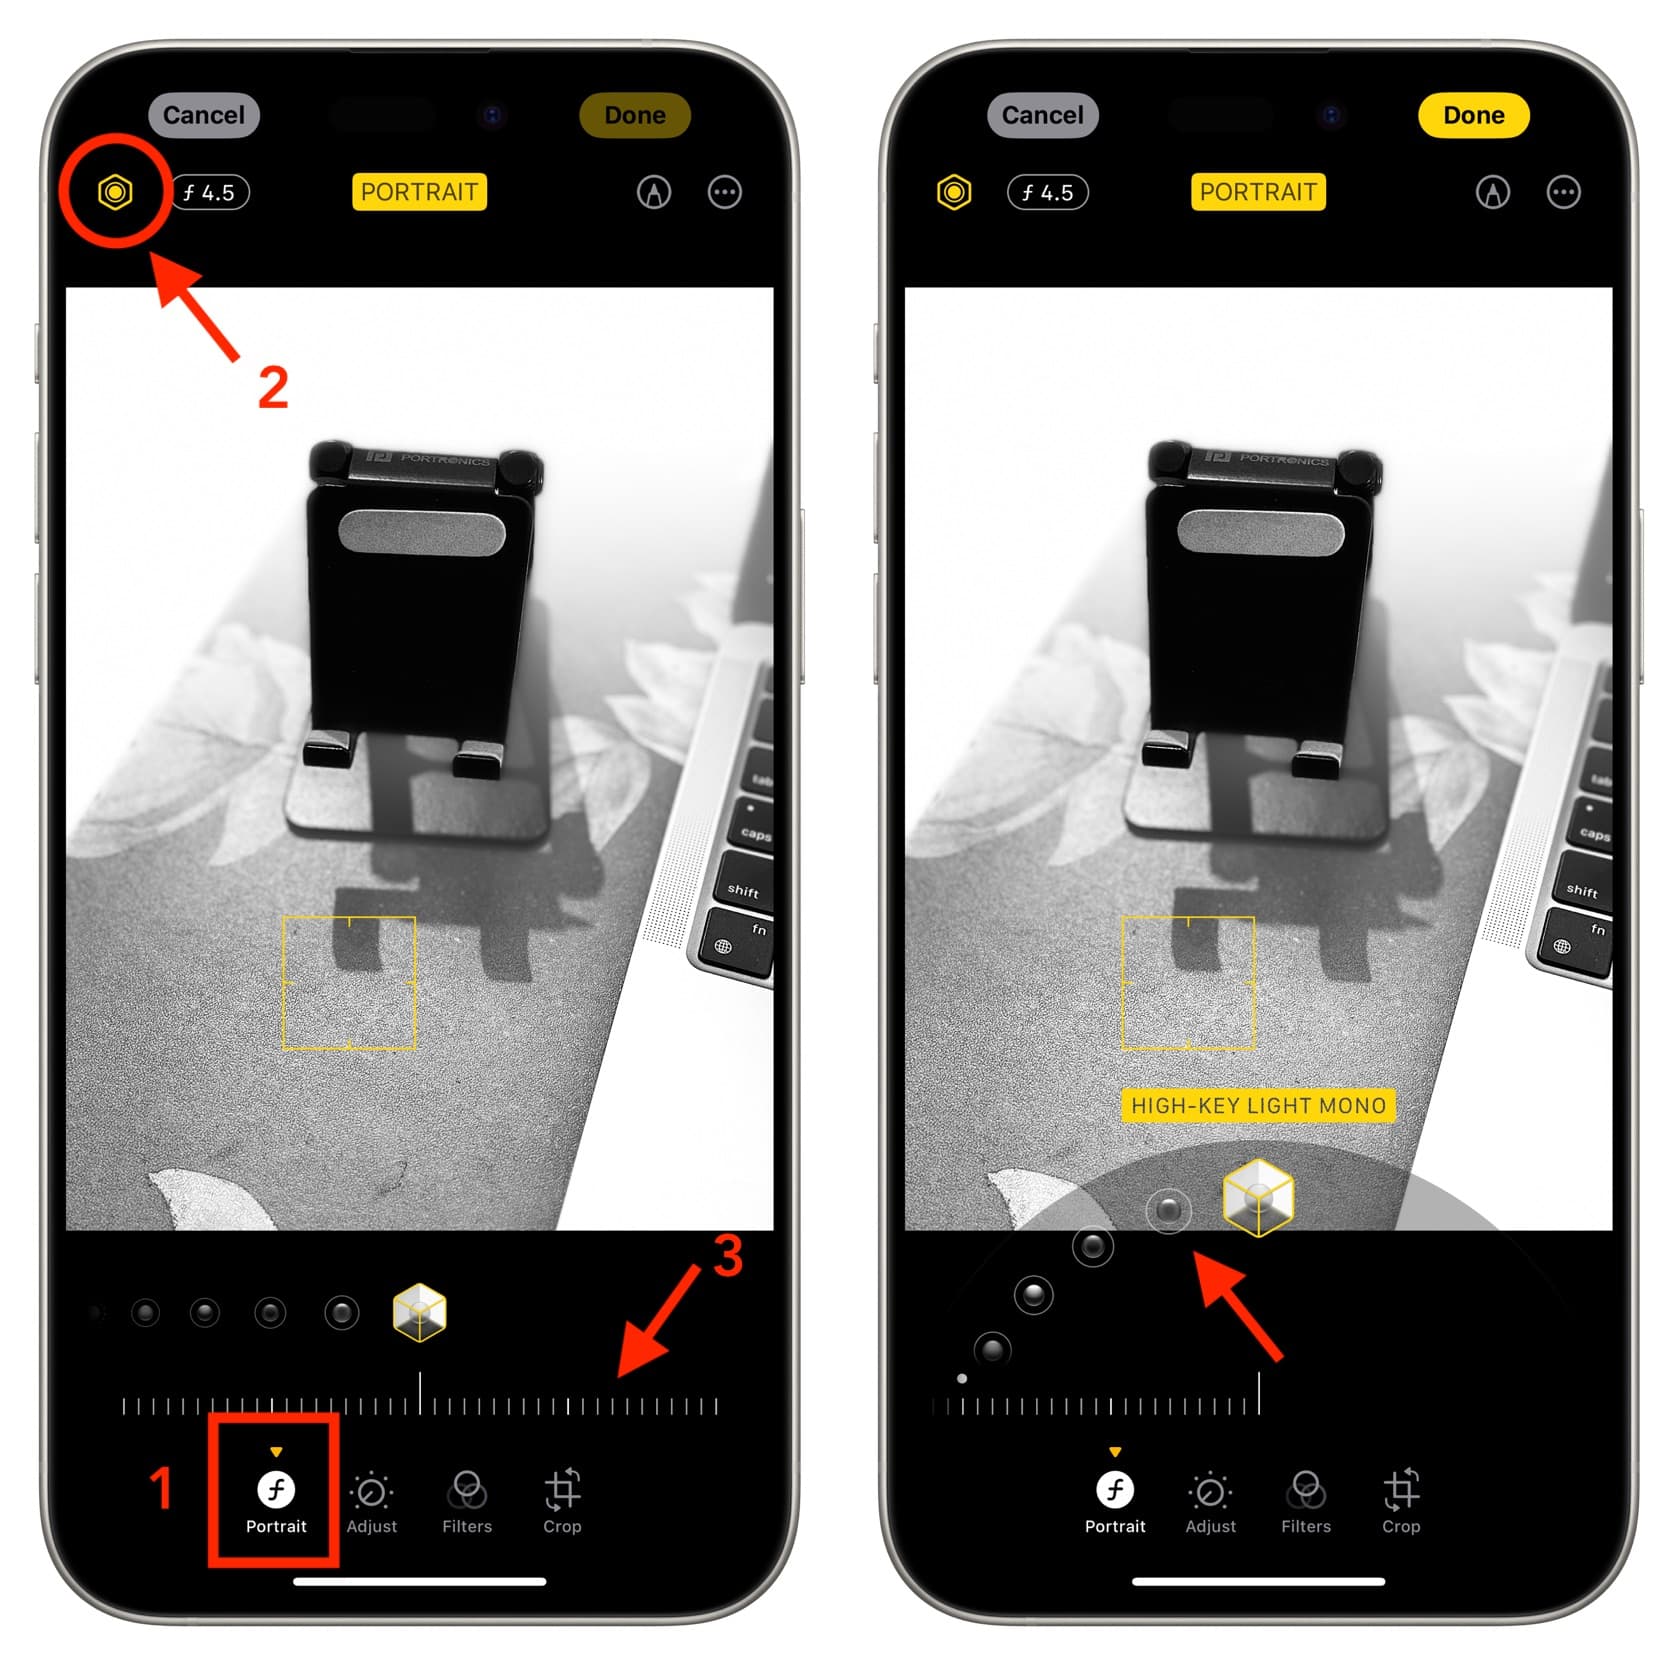 Editing High-Key Light Mono photo on iPhone